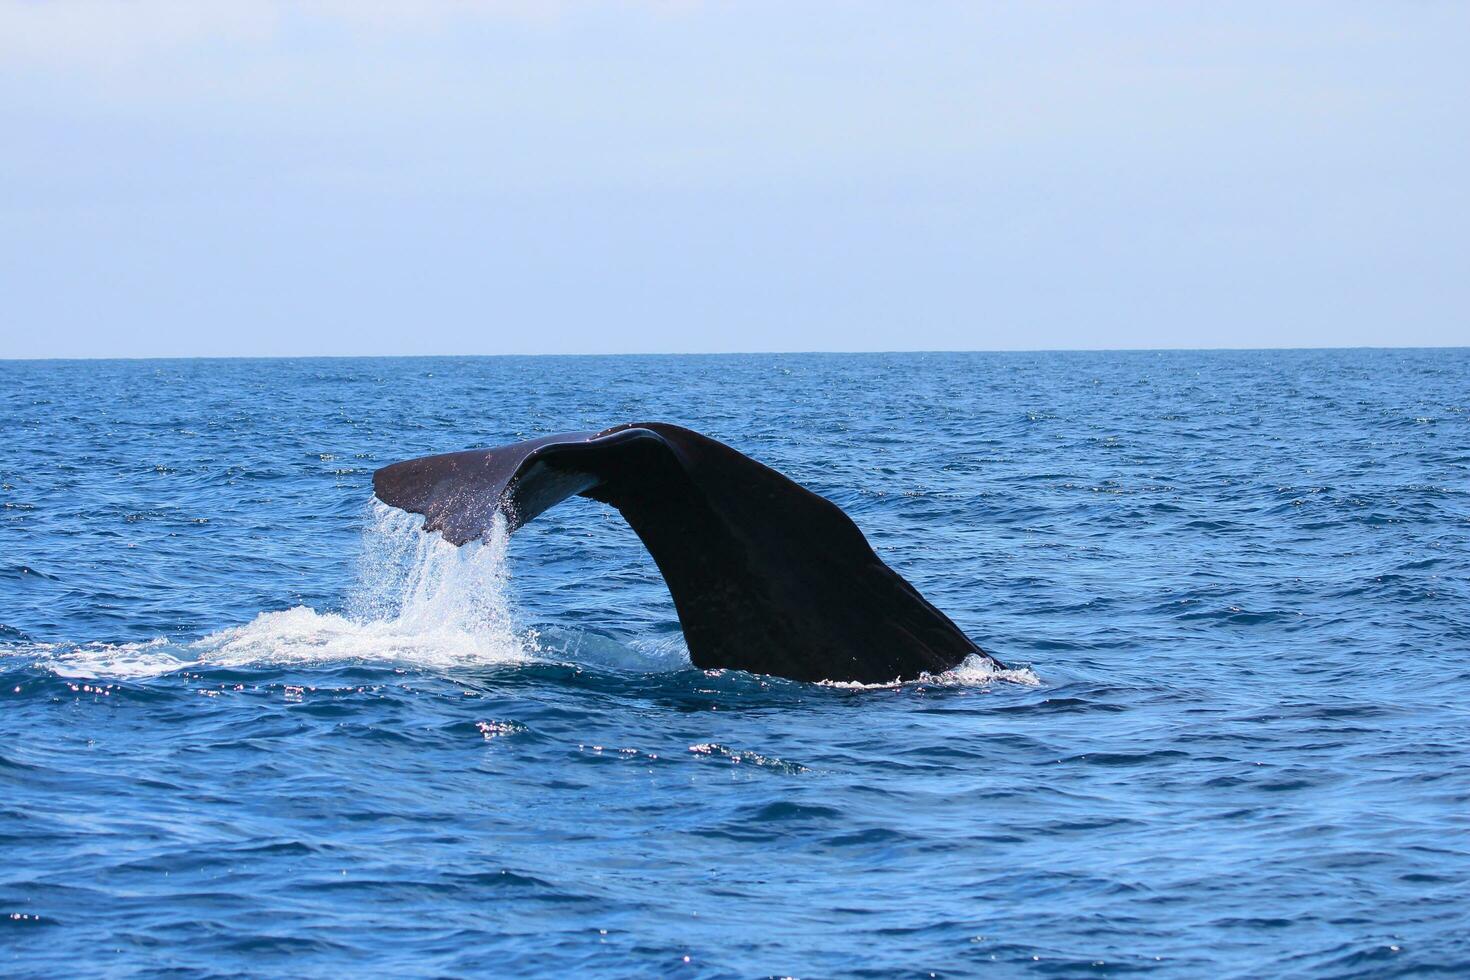 Sperm Whale in New Zealand photo